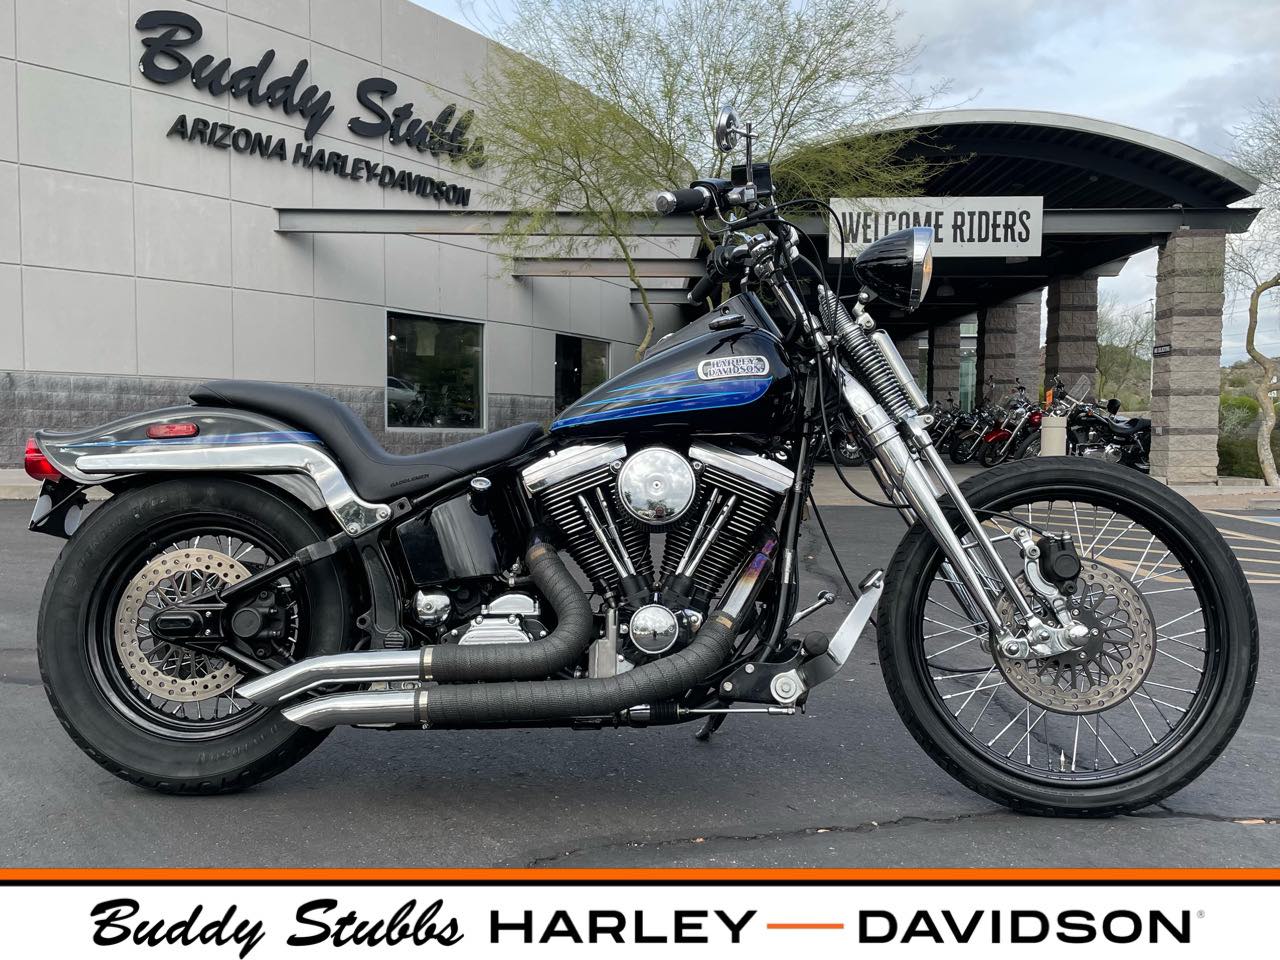 1993 Harley-Davidson FXSTS at Buddy Stubbs Arizona Harley-Davidson